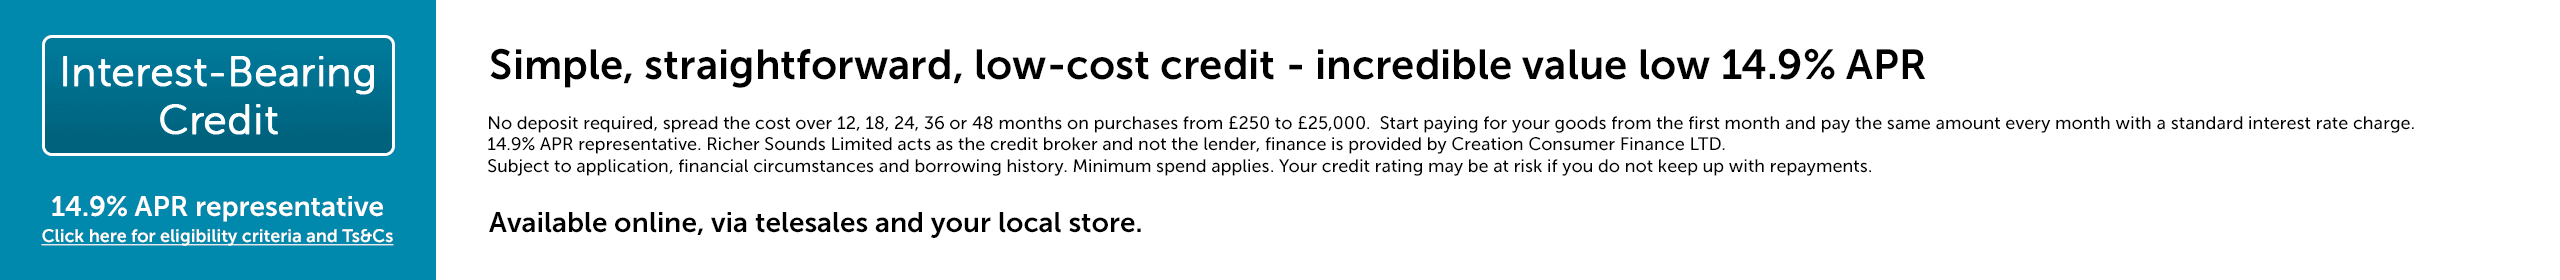 Interest-Bearing Credit